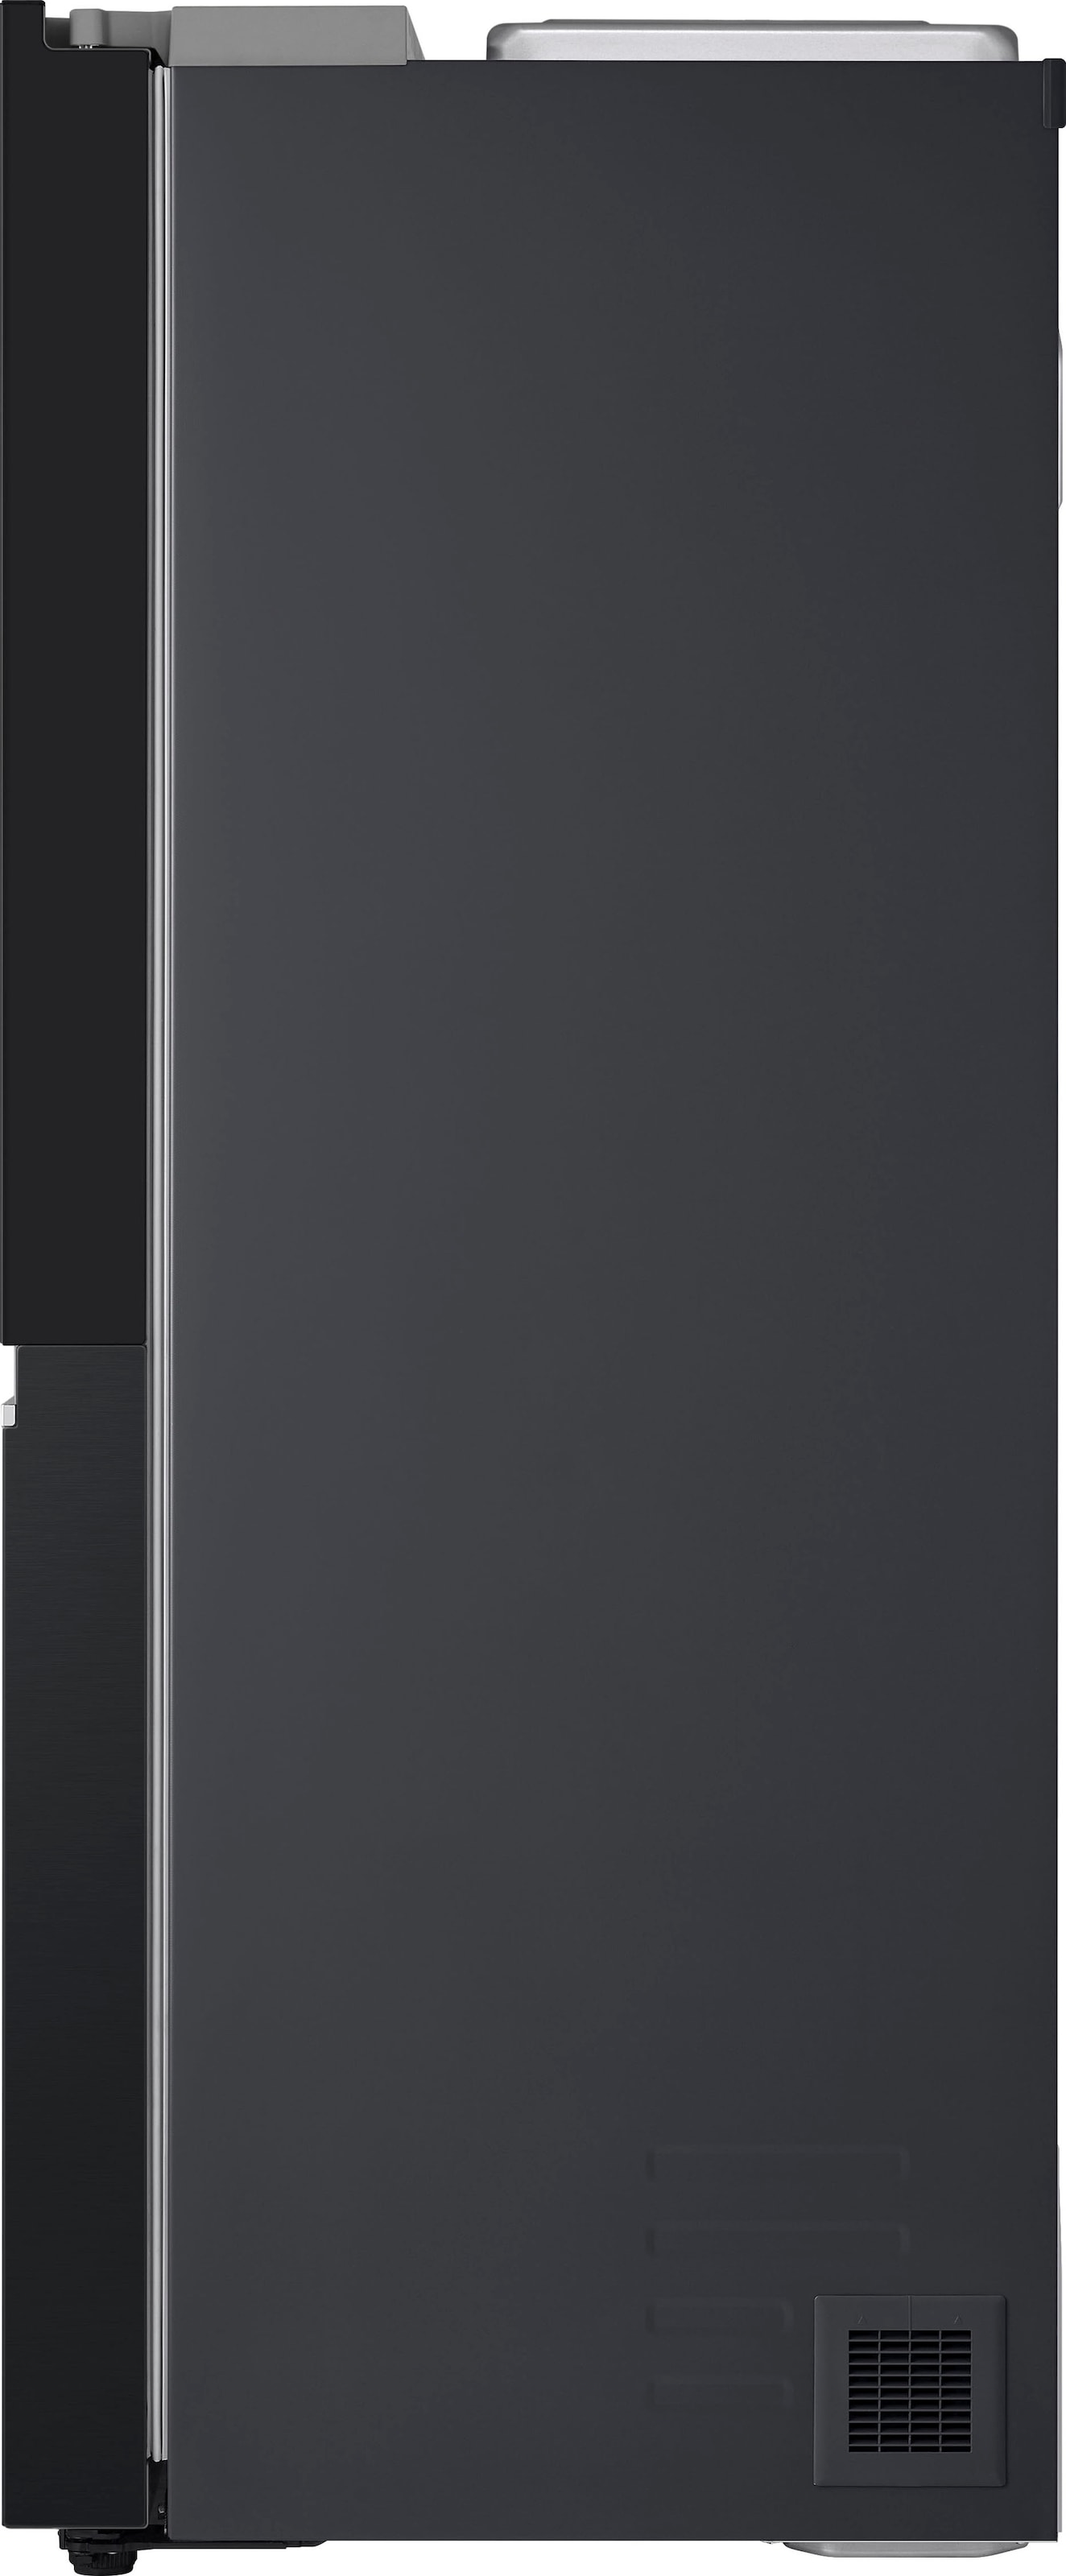 LG Side-by-Side, GSGV81EPLL, 179 cm hoch, 91,3 cm breit, 4 Jahre Garantie inklusive